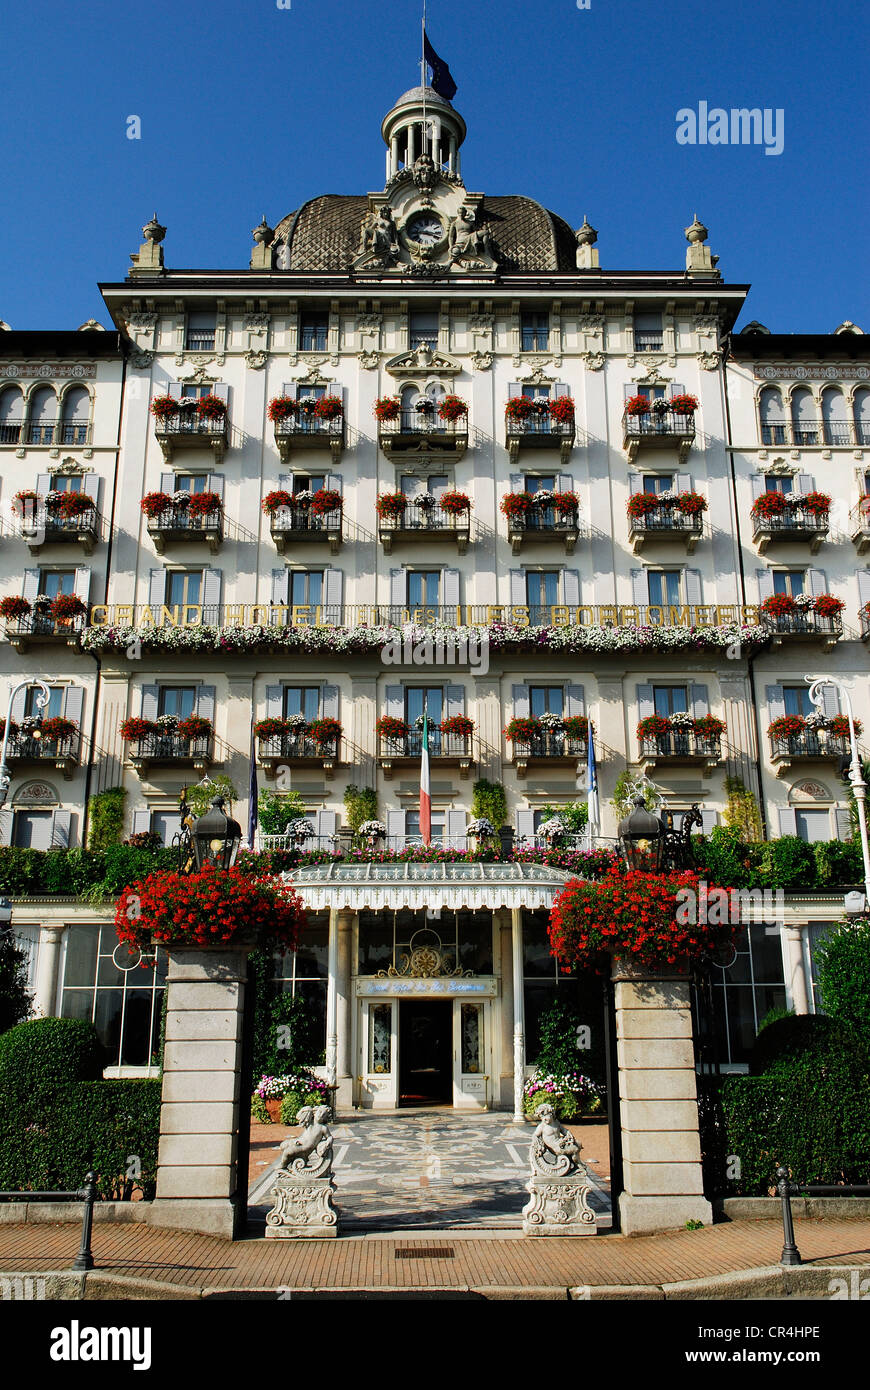 Italy, Piedmont, Lake Maggiore, Stresa, Grand Hotel des Iles Borromees, Corso Umberto I 67 Stock Photo